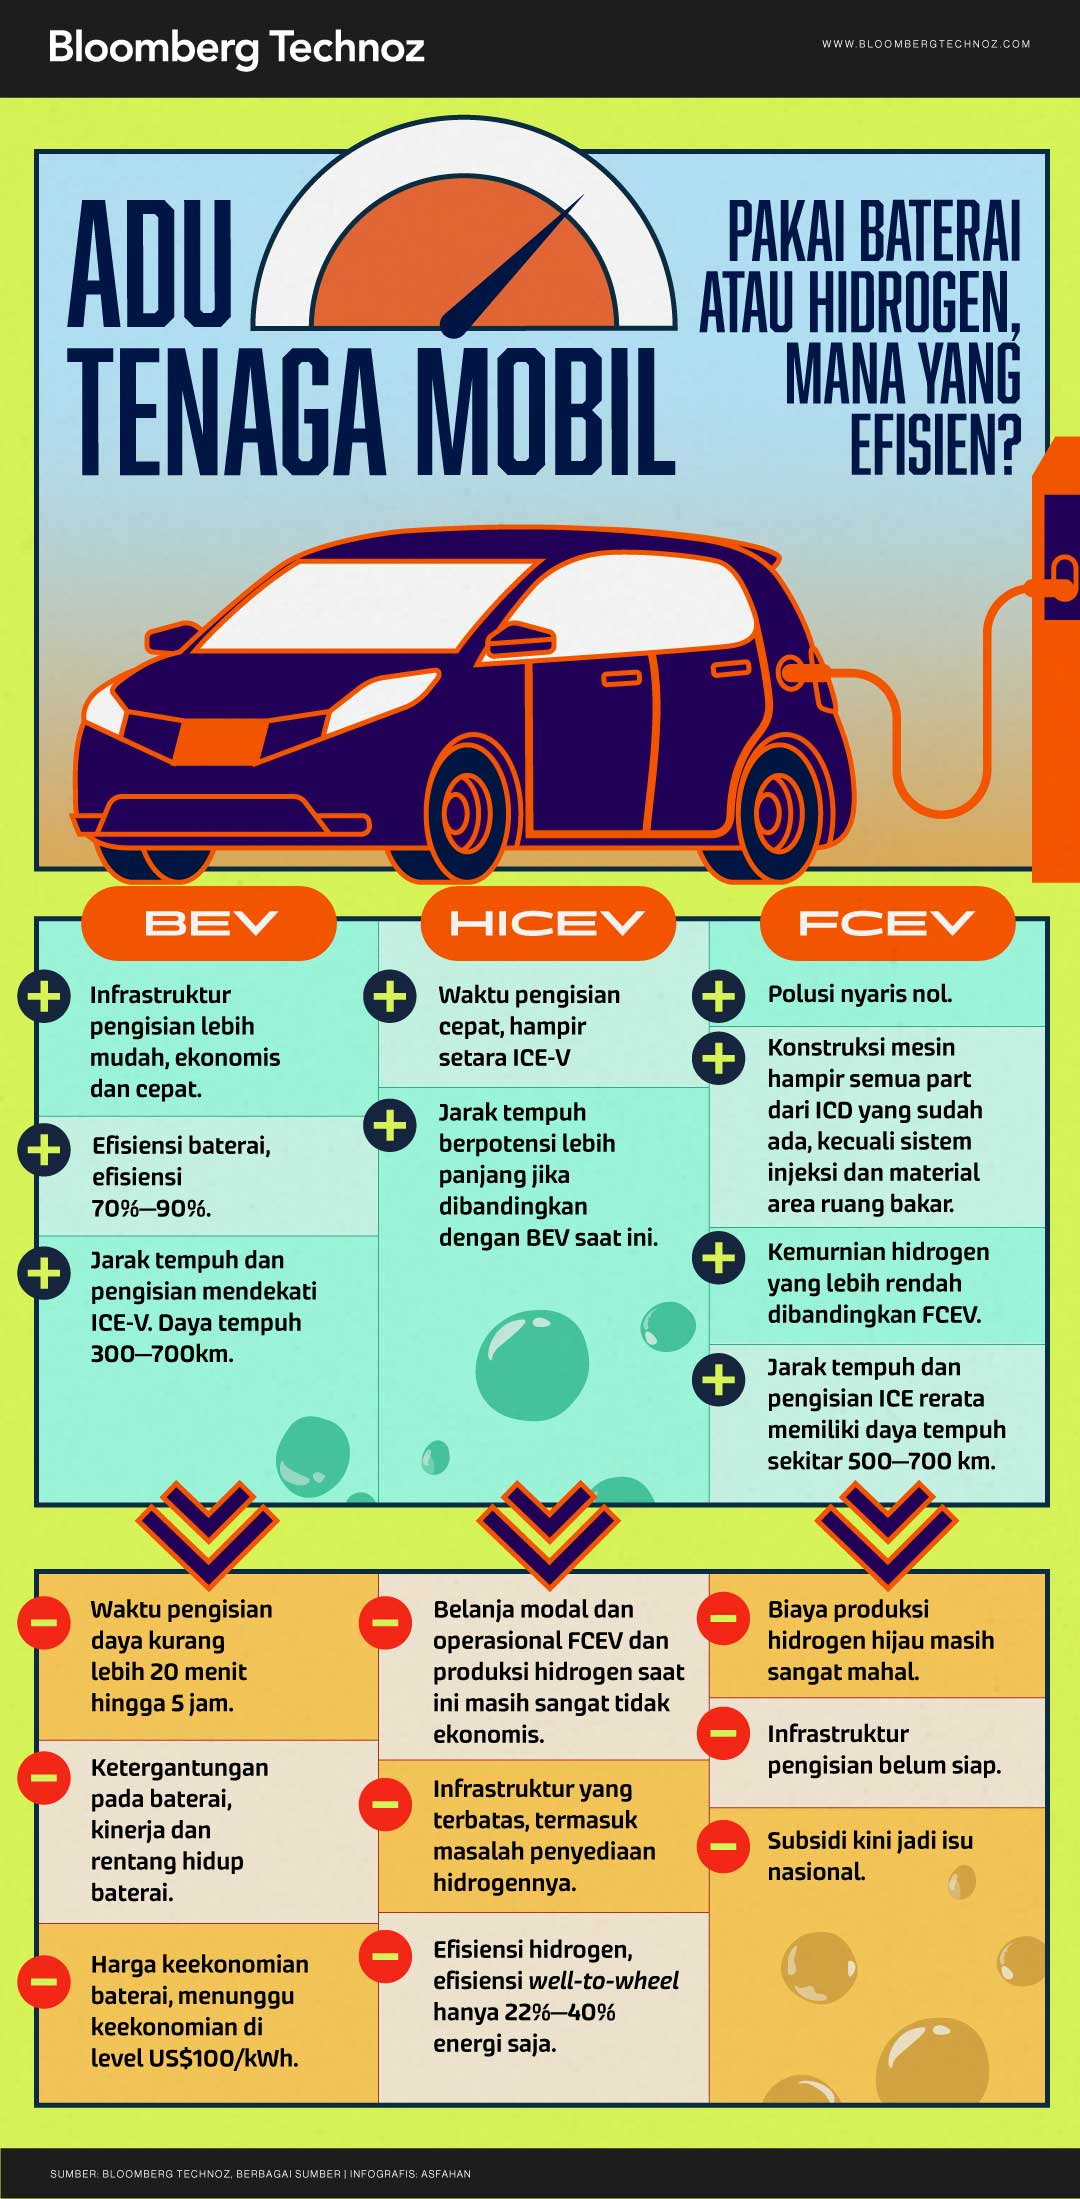 Adu Tenaga Mobil Pakai Baterai atau Hidrogen Mana yang Efisien (Asfahan/Bloomberg Technoz)